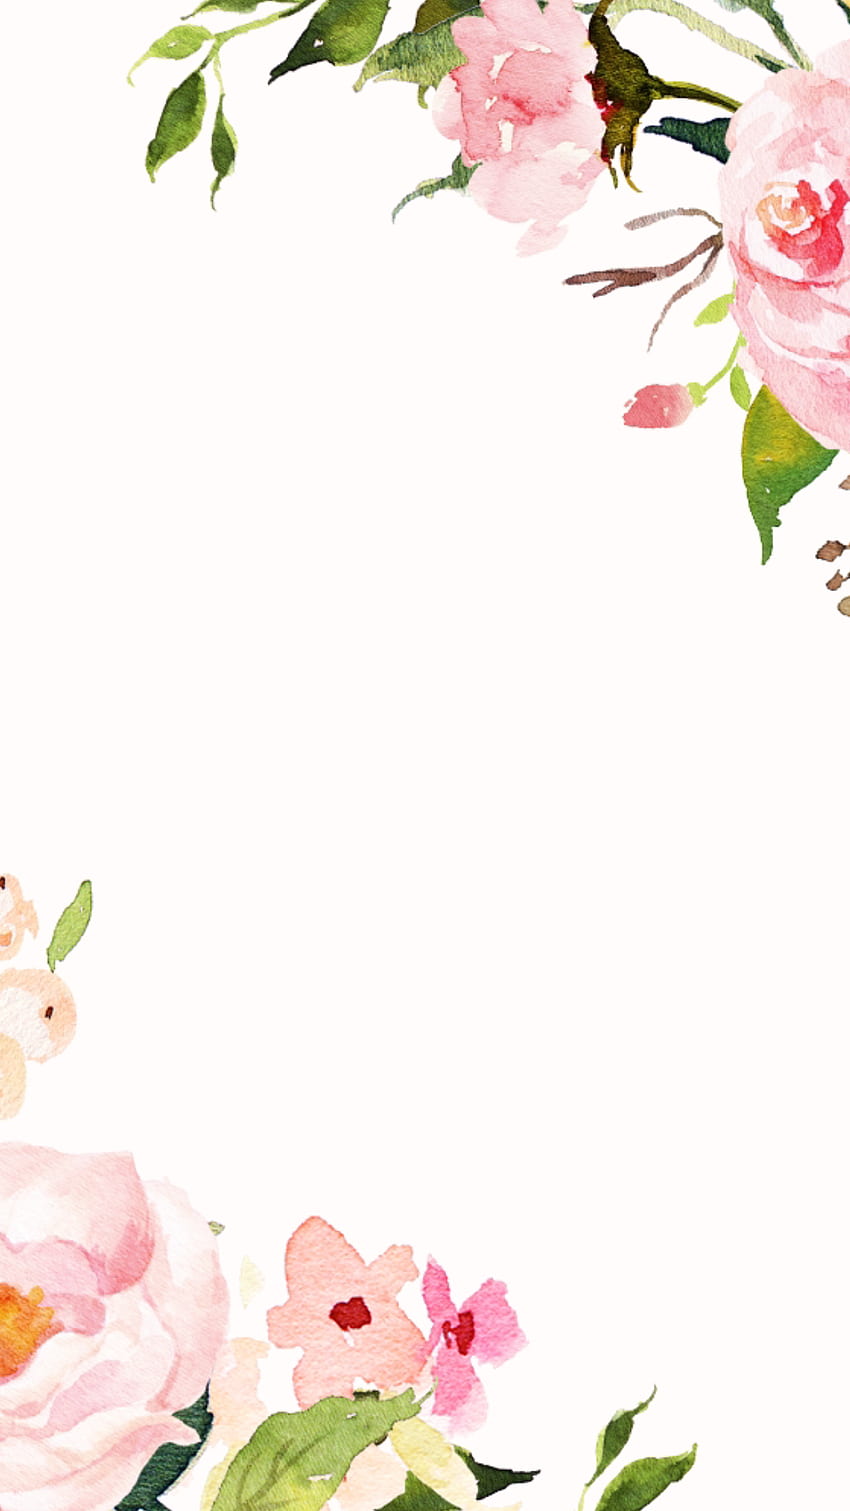 Merah muda putih cat air bingkai bunga perbatasan bunga latar belakang ponsel layar kunci iPhone. iPhone latar belakang bunga, latar belakang bunga, cat air bunga wallpaper ponsel HD